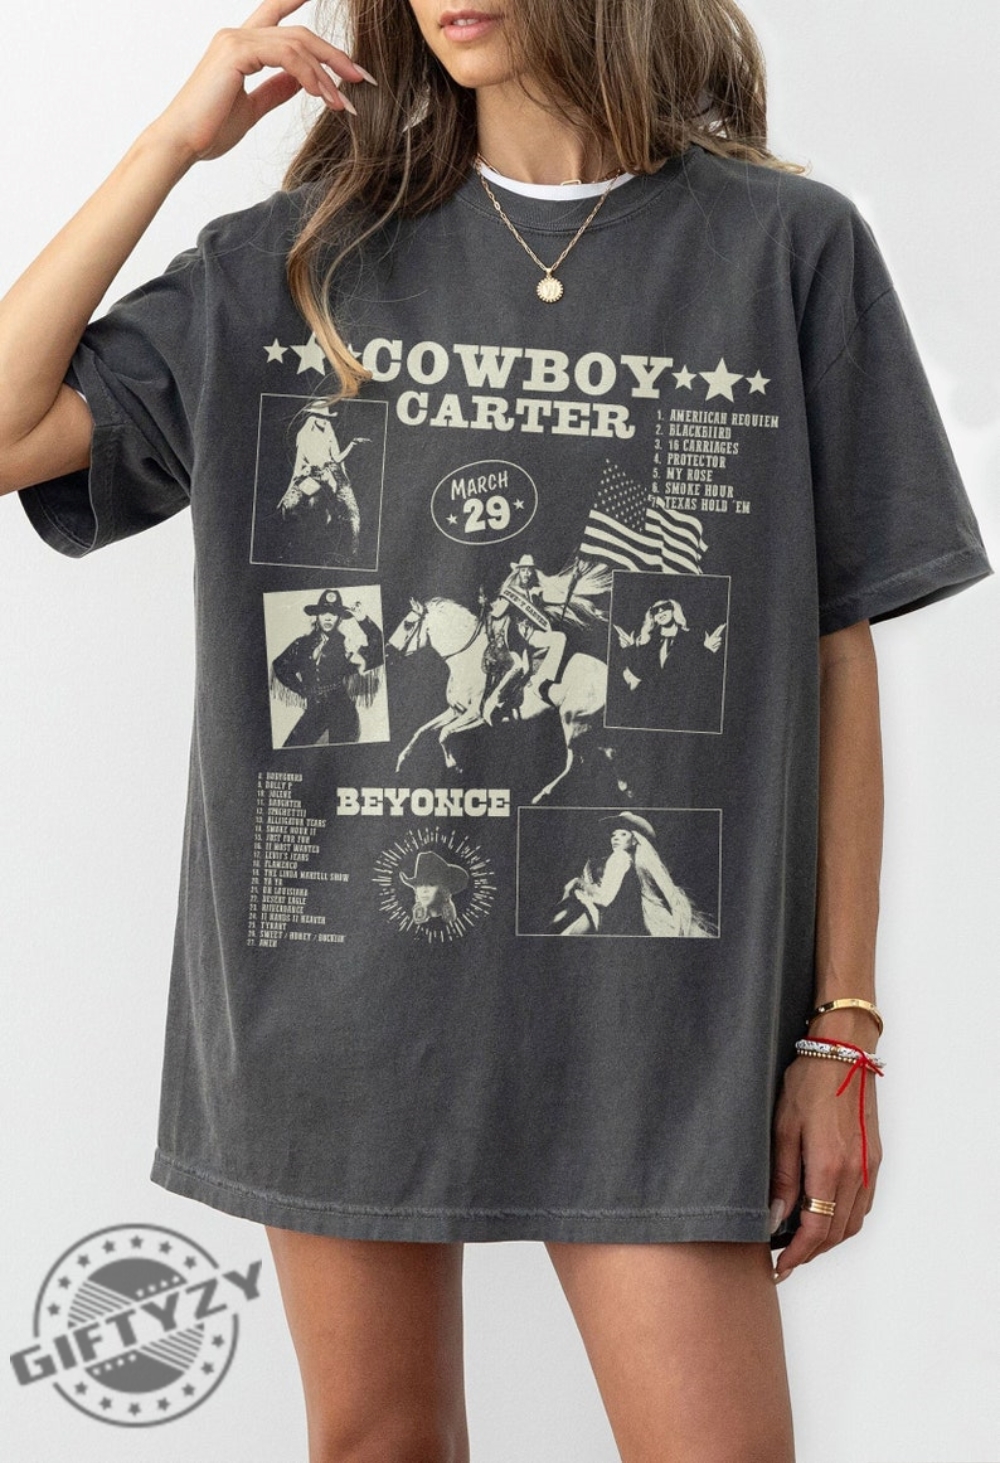 Vintage Beyonce Cowboy Carter Shirt Leviis Jeans Sweatshirt Beyhive Exclusive Hoodie Cowboy Carter Tshirt Beyoncé Merch